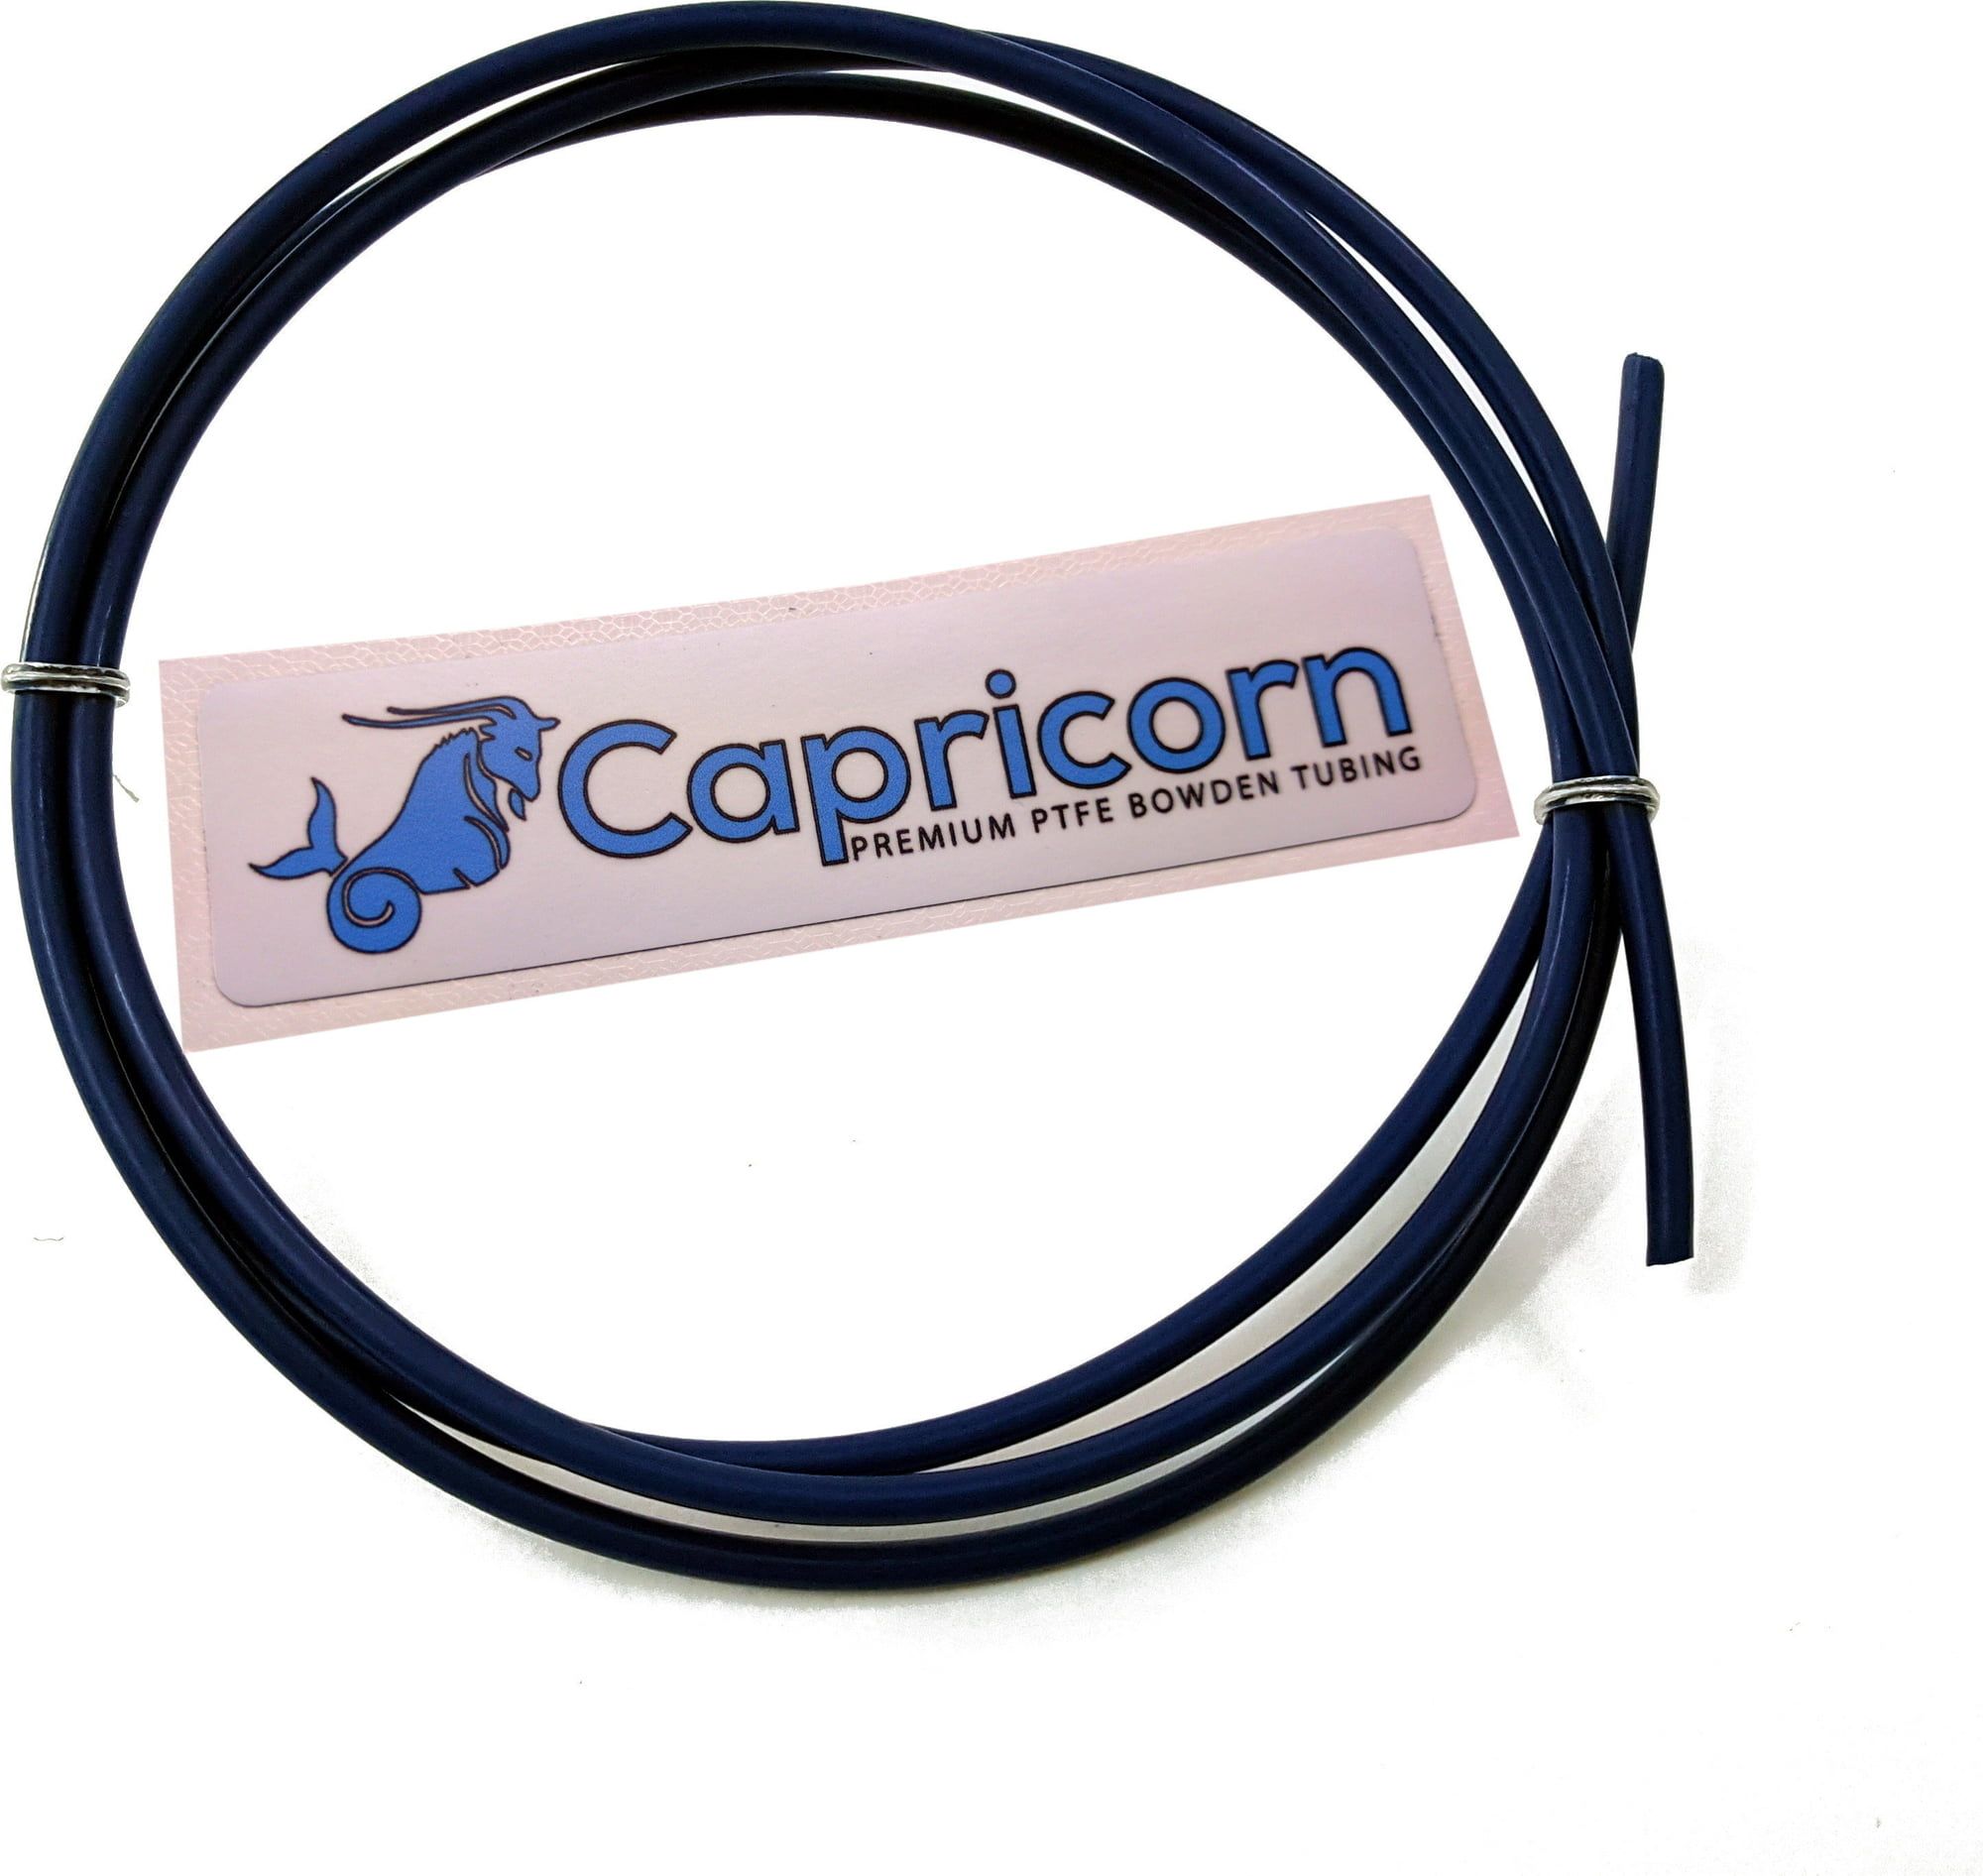 Capricorn XS Ultra Low Friction PTFE Bowden - 3DJake International